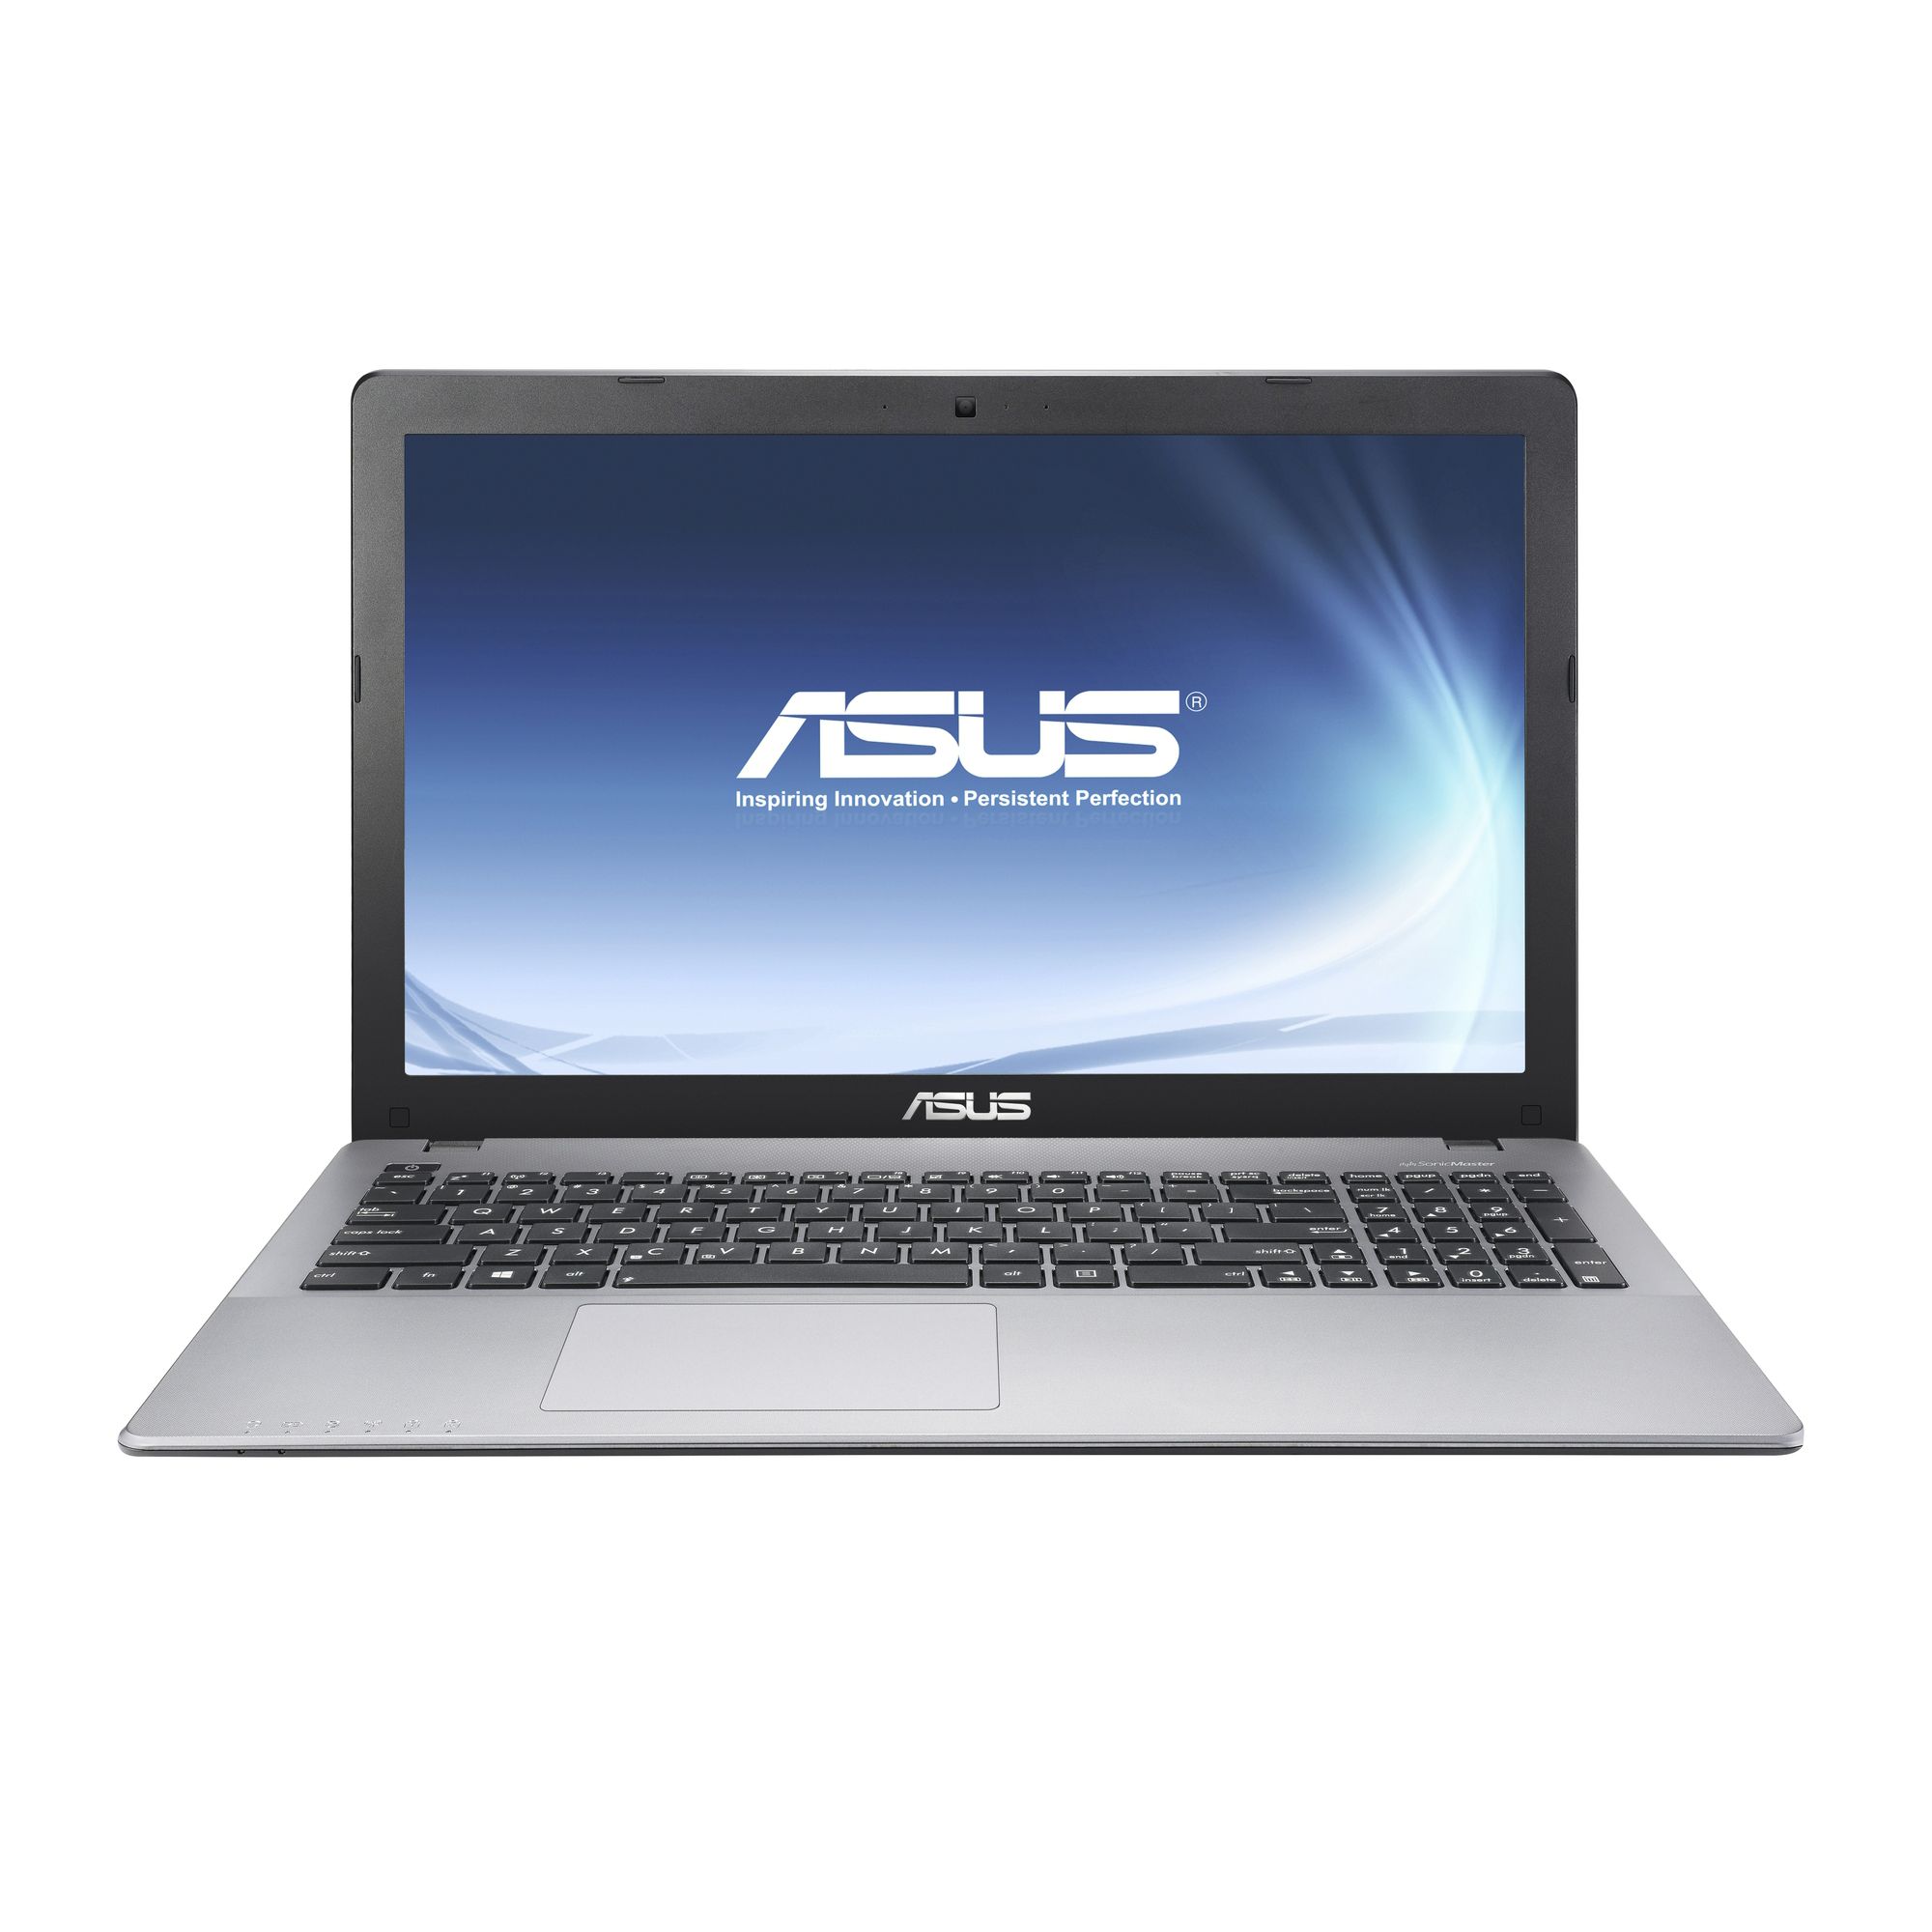 Asus X550CA (15.6 inch) Notebook Celeron (1007U) 4GB 500GB DVDRW WLAN Webcam Windows 8 (Integrated Intel HD Graphics 4000)